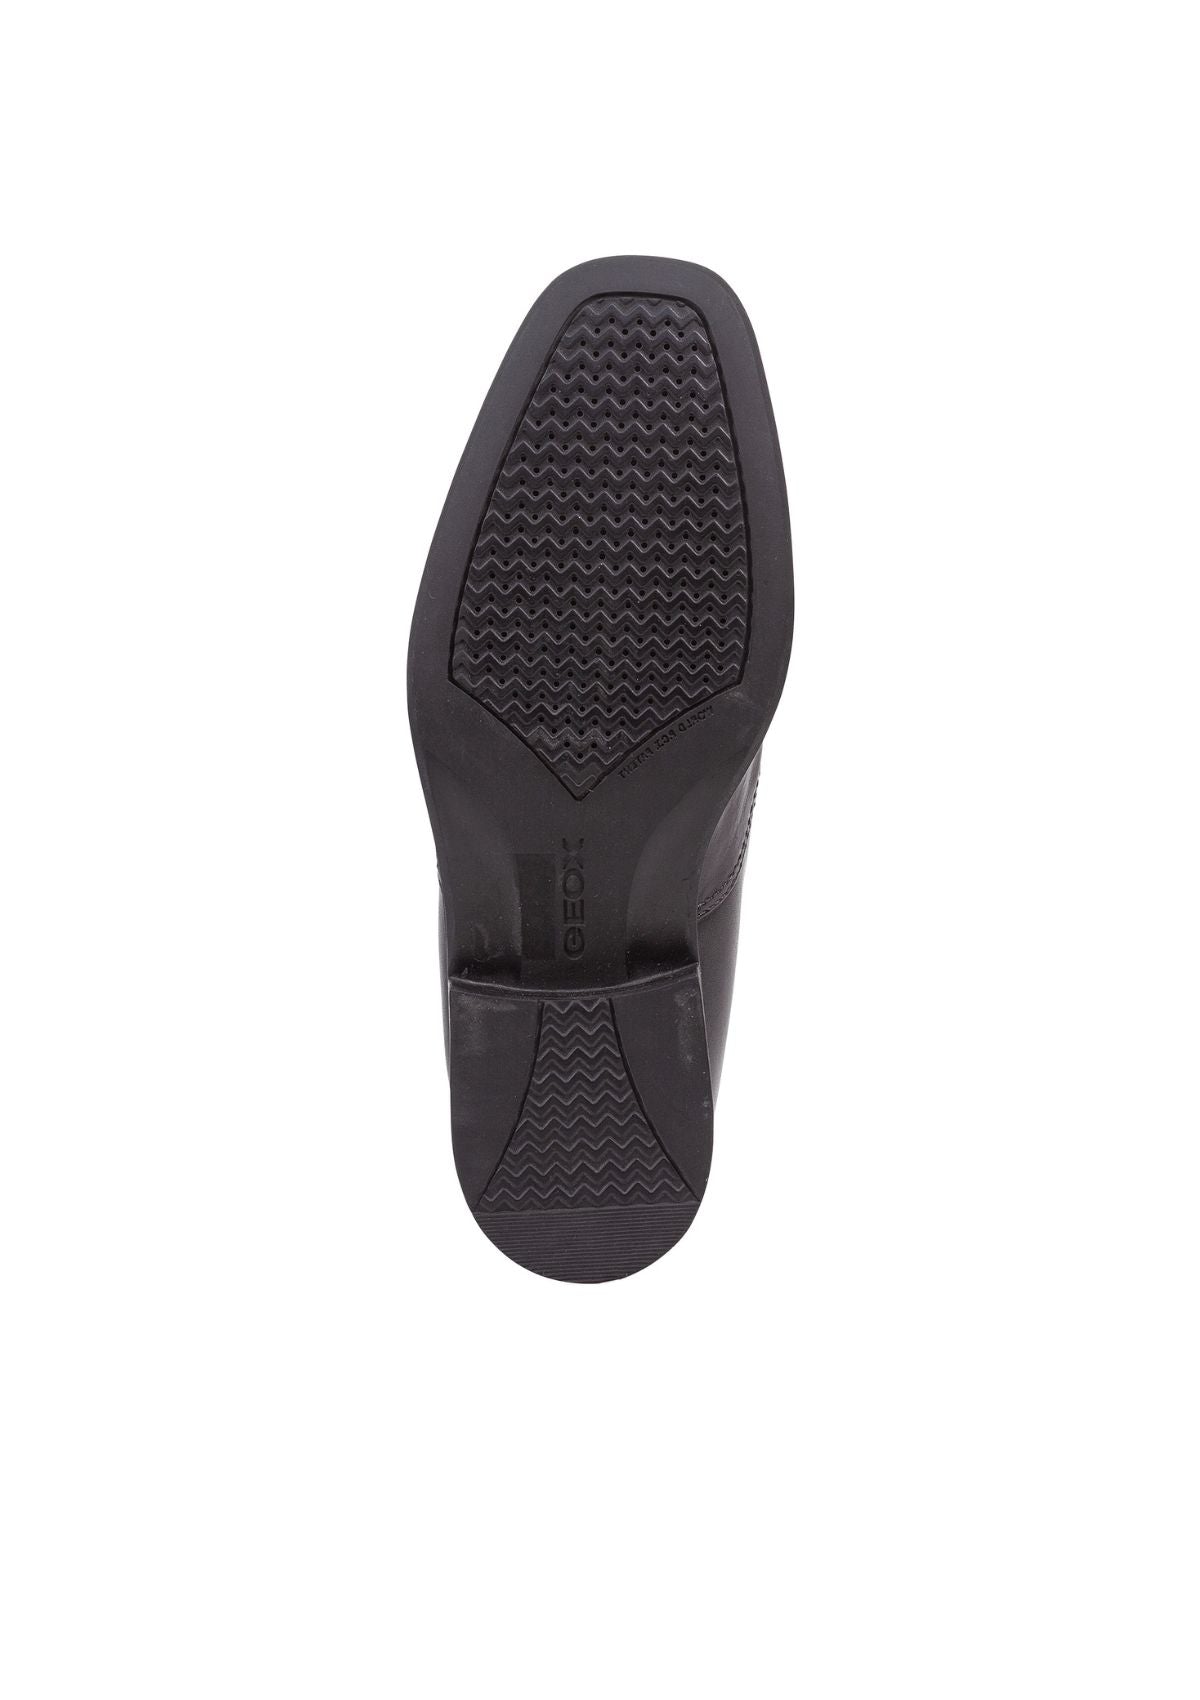 Geox Boys School Shoes FEDERICO Z Slip-On Black sole